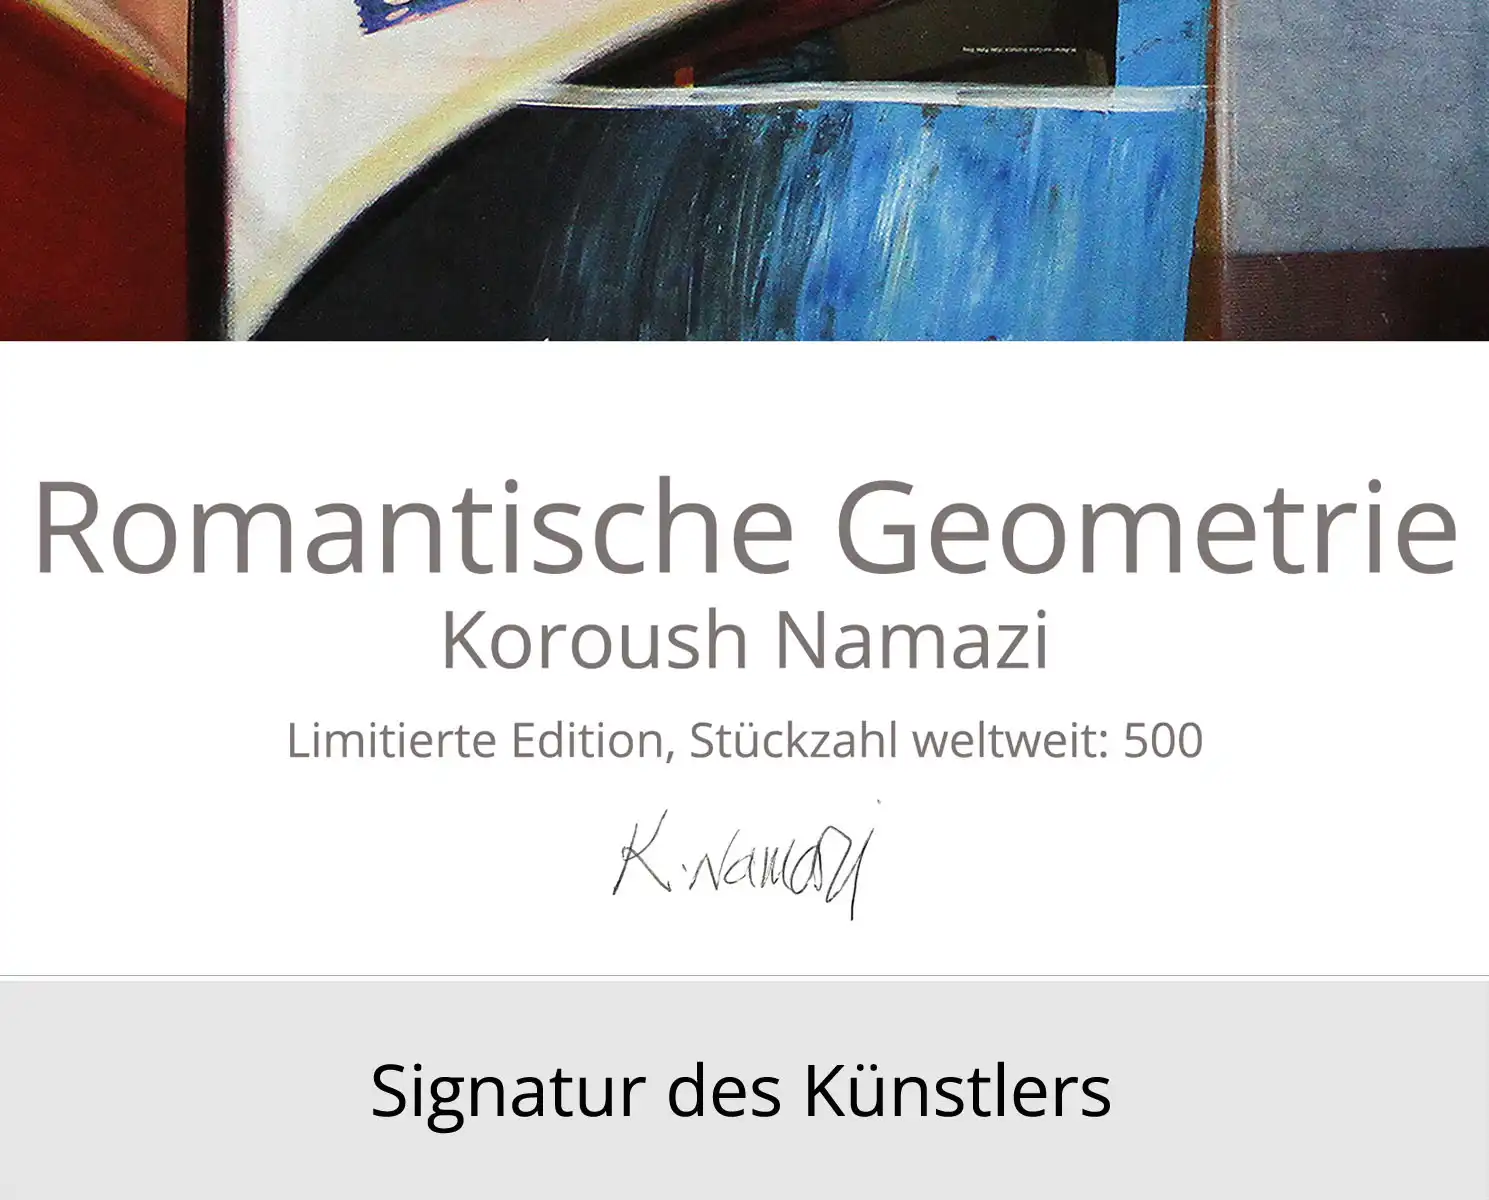 Limitierte Edition auf Papier, K. Namazi: "Romantische Geometrie", Fineartprint, Kollektion E&K